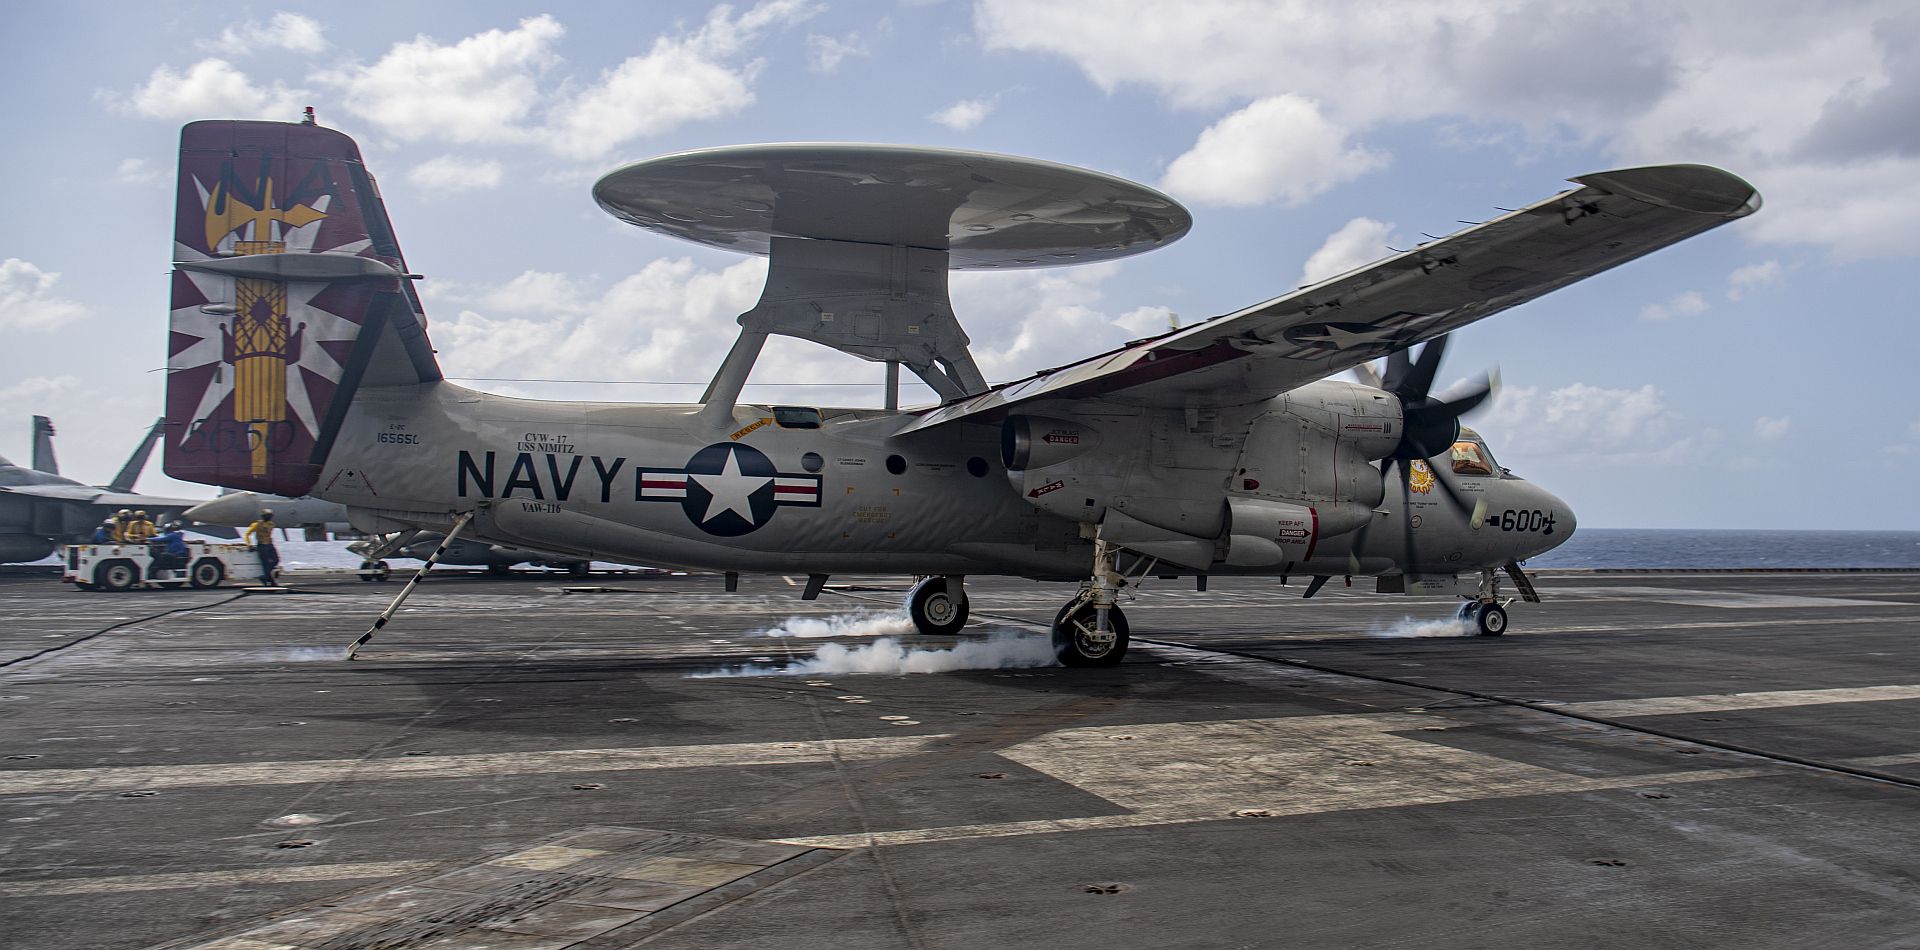  116 Makes An Arrested Landing On The Flight Deck Of The Aircraft Carrier USS Nimitz